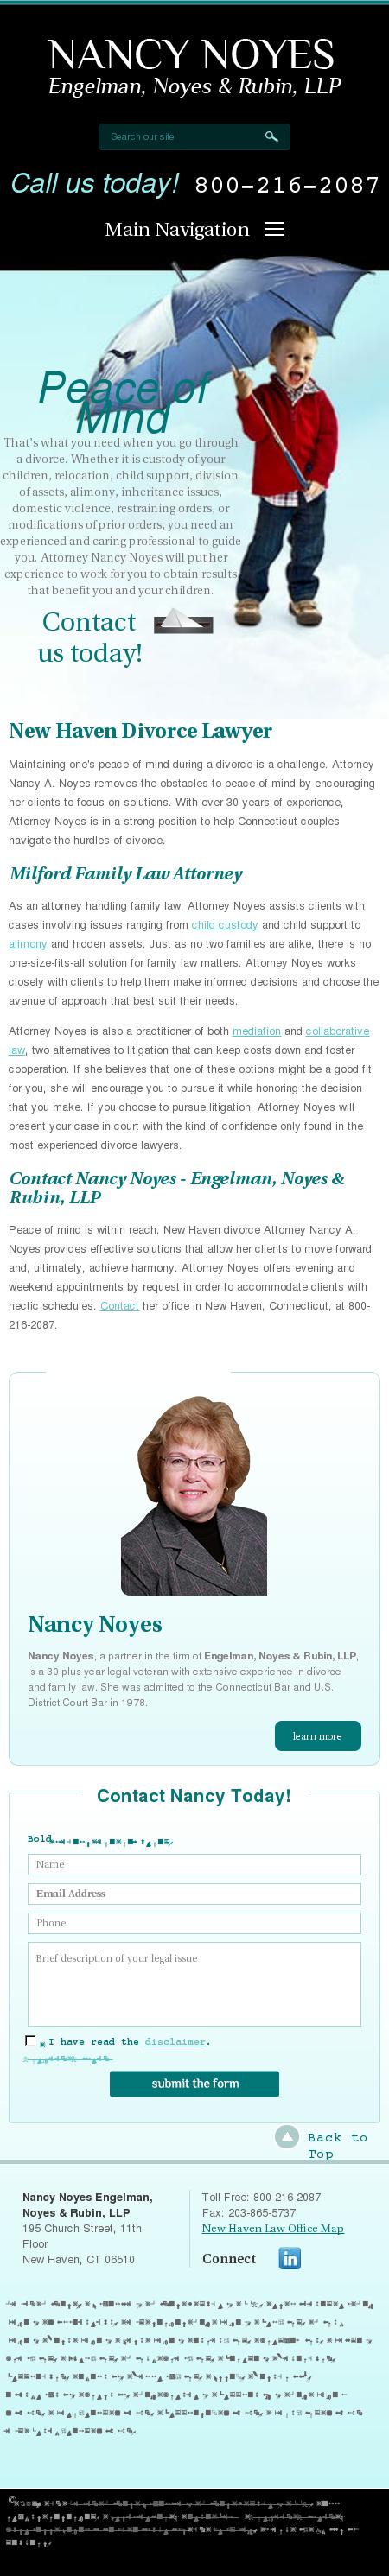 Nancy Noyes - New Haven CT Lawyers